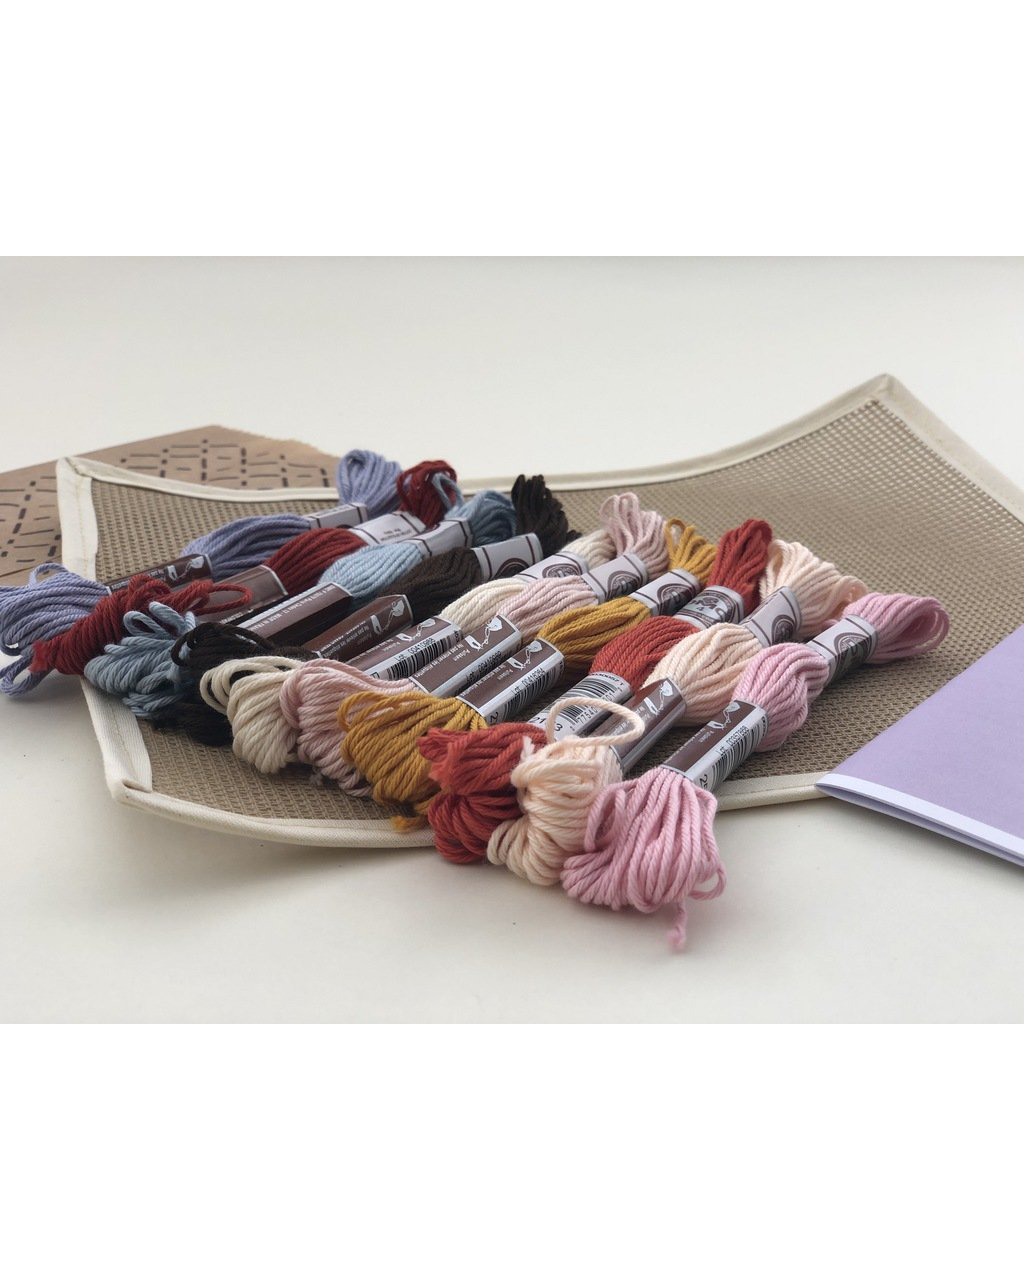 Olga Needlepoint Counted Canvas Kit by Unwind Studio